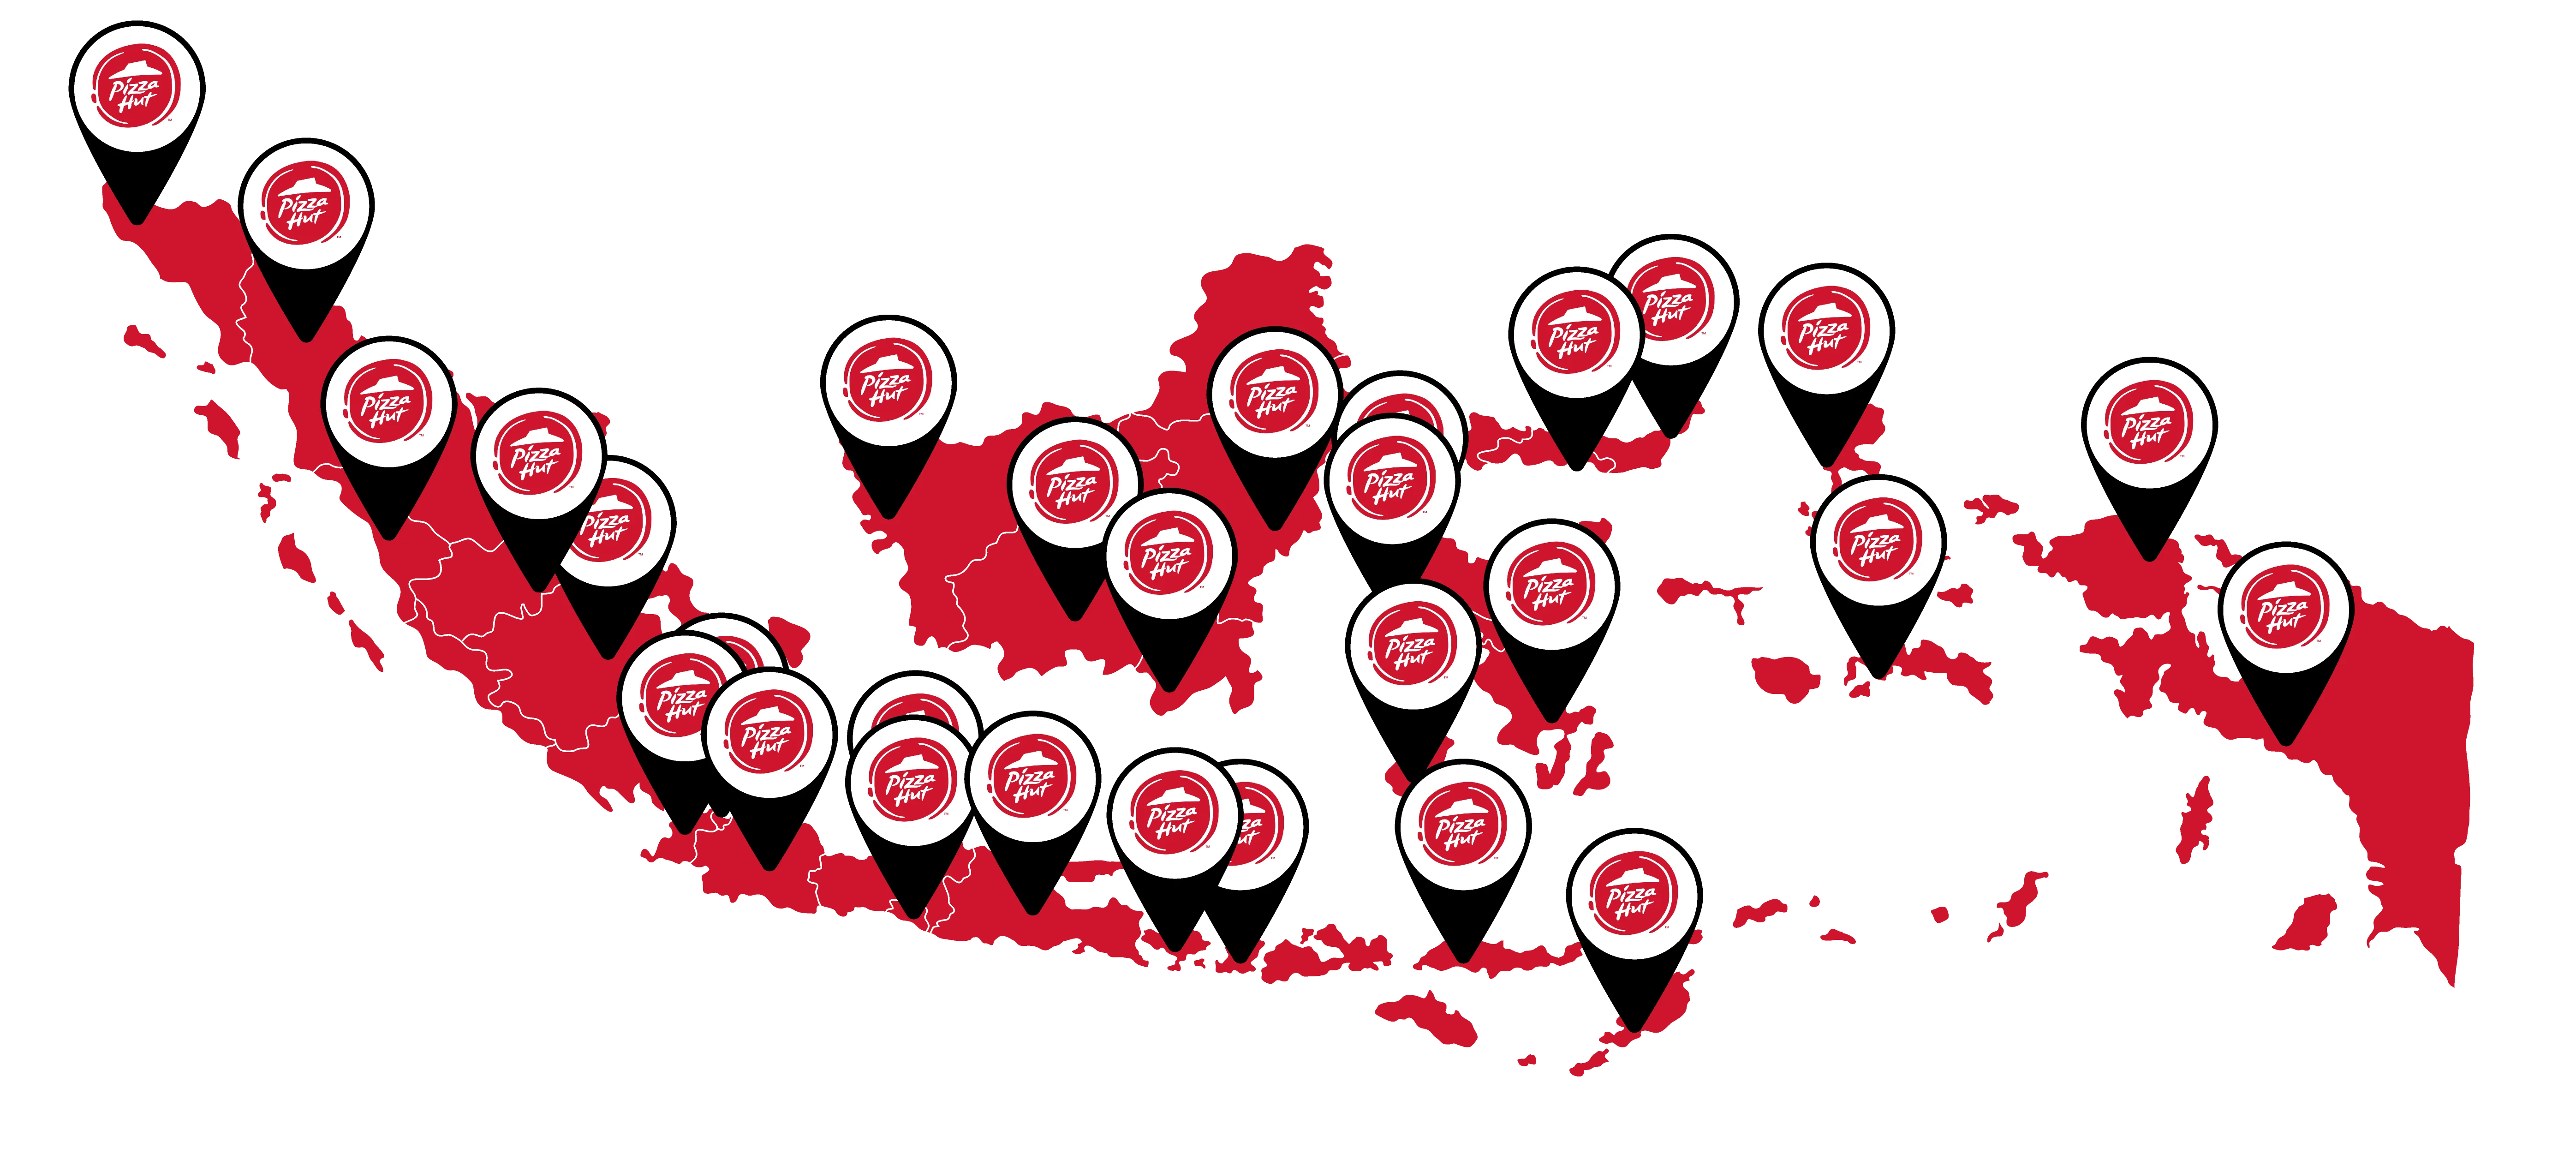 Pizza Hut locations in Indonesia